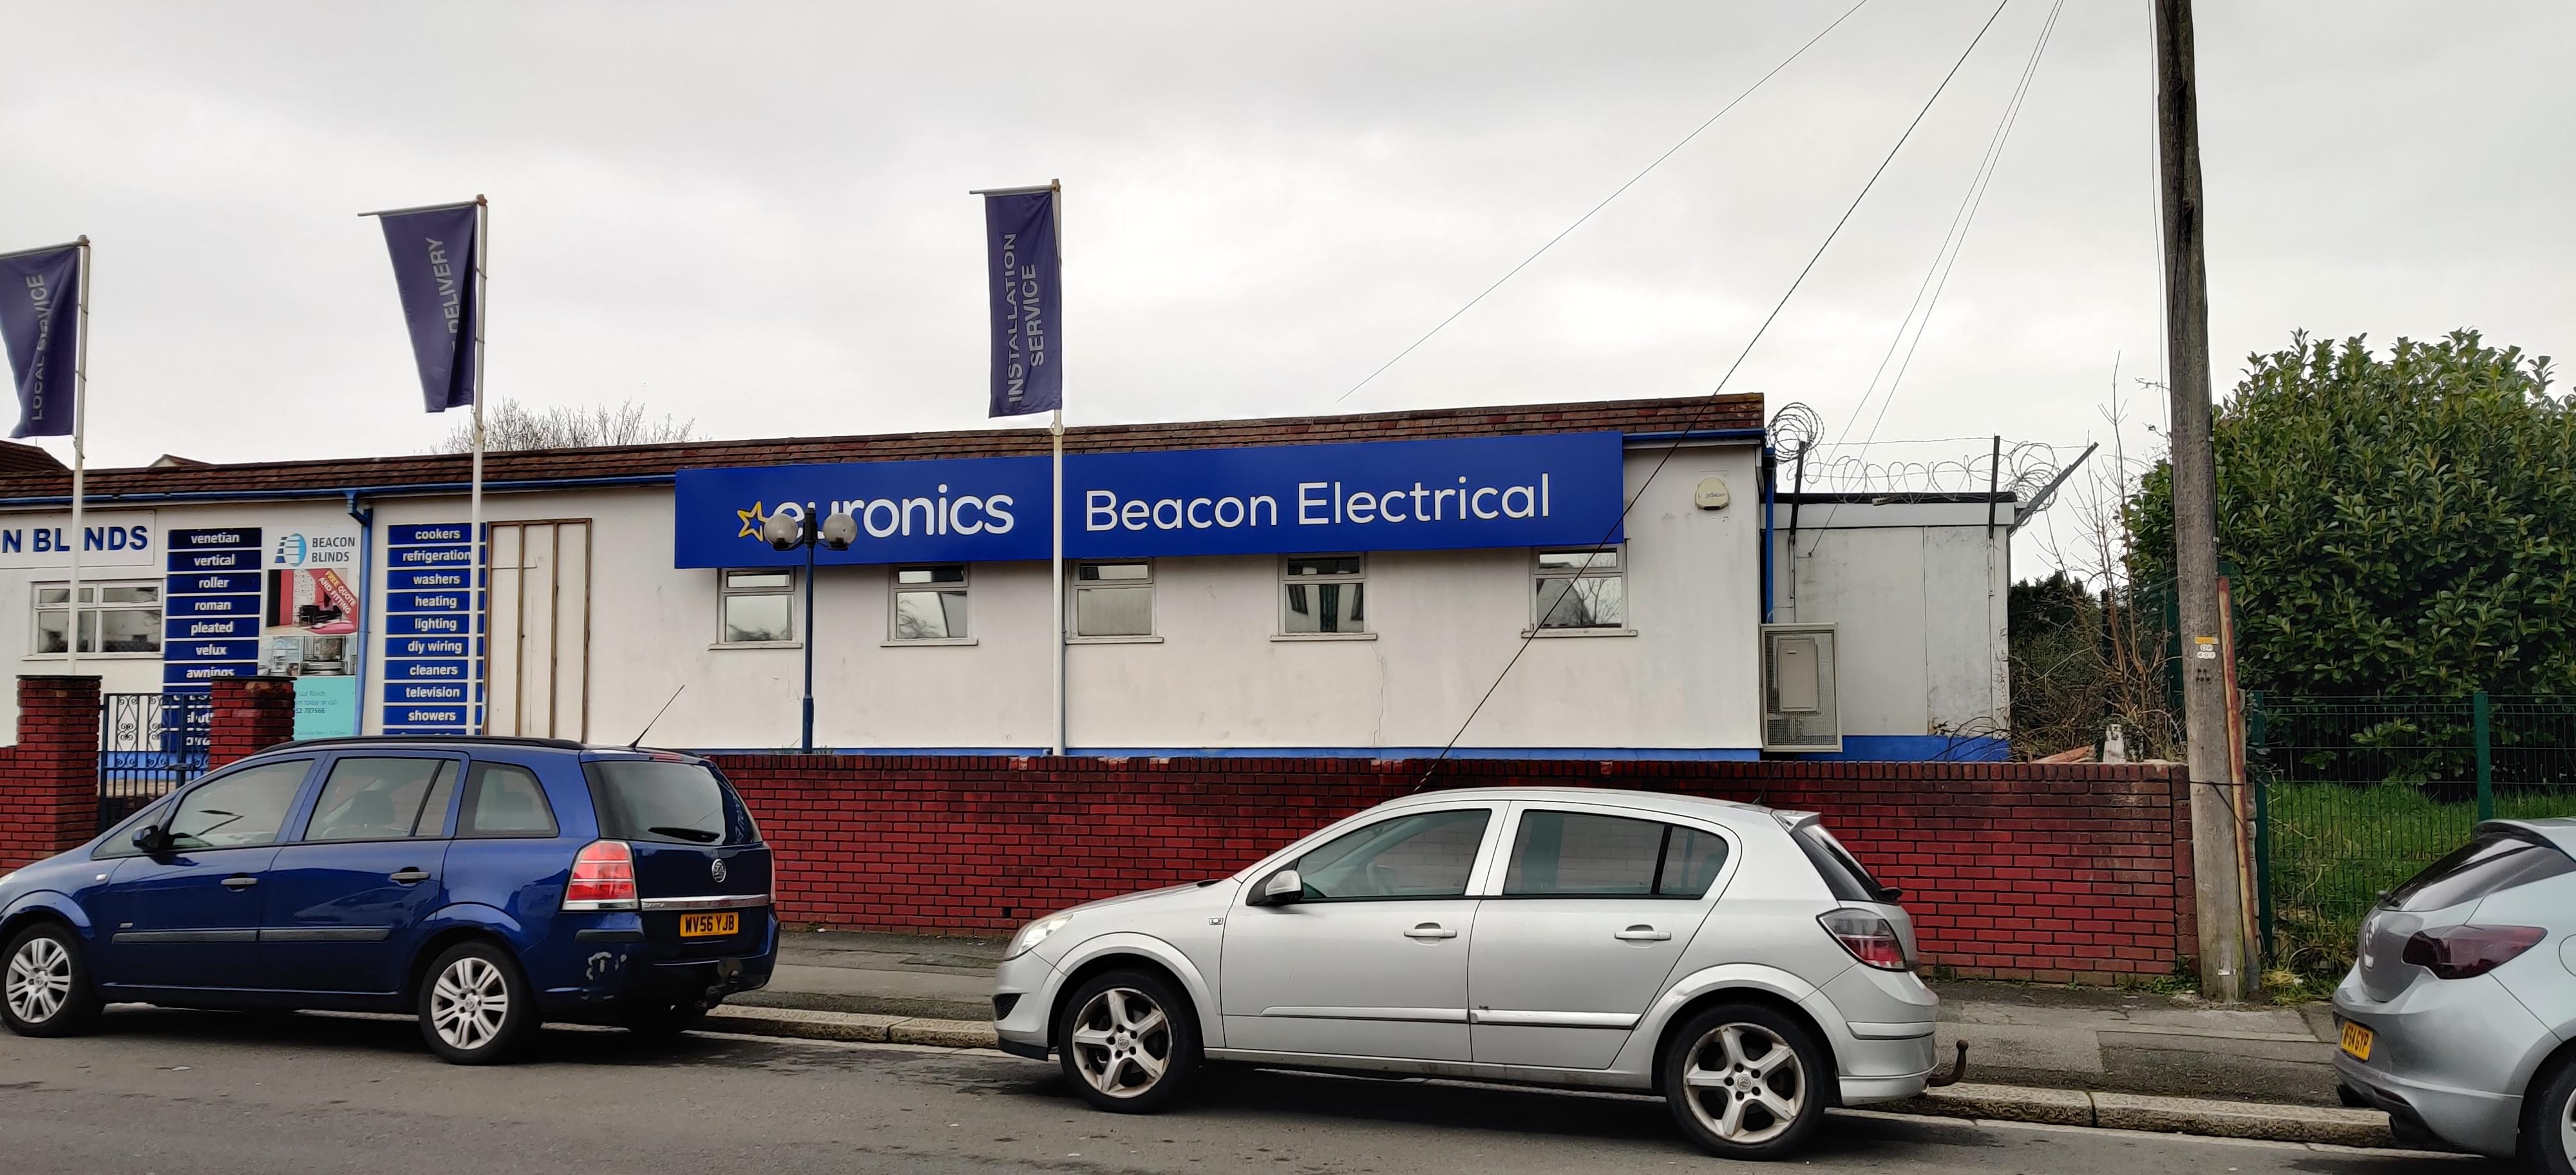 Beacon Electrical - Plymouth